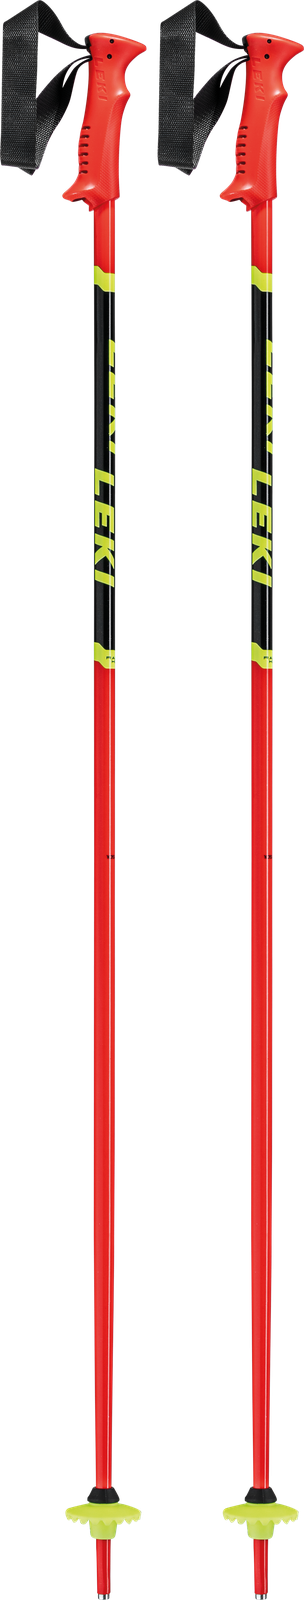 Leki Kids Ski Poles Red Yellow & Black SKI POLES Leki   